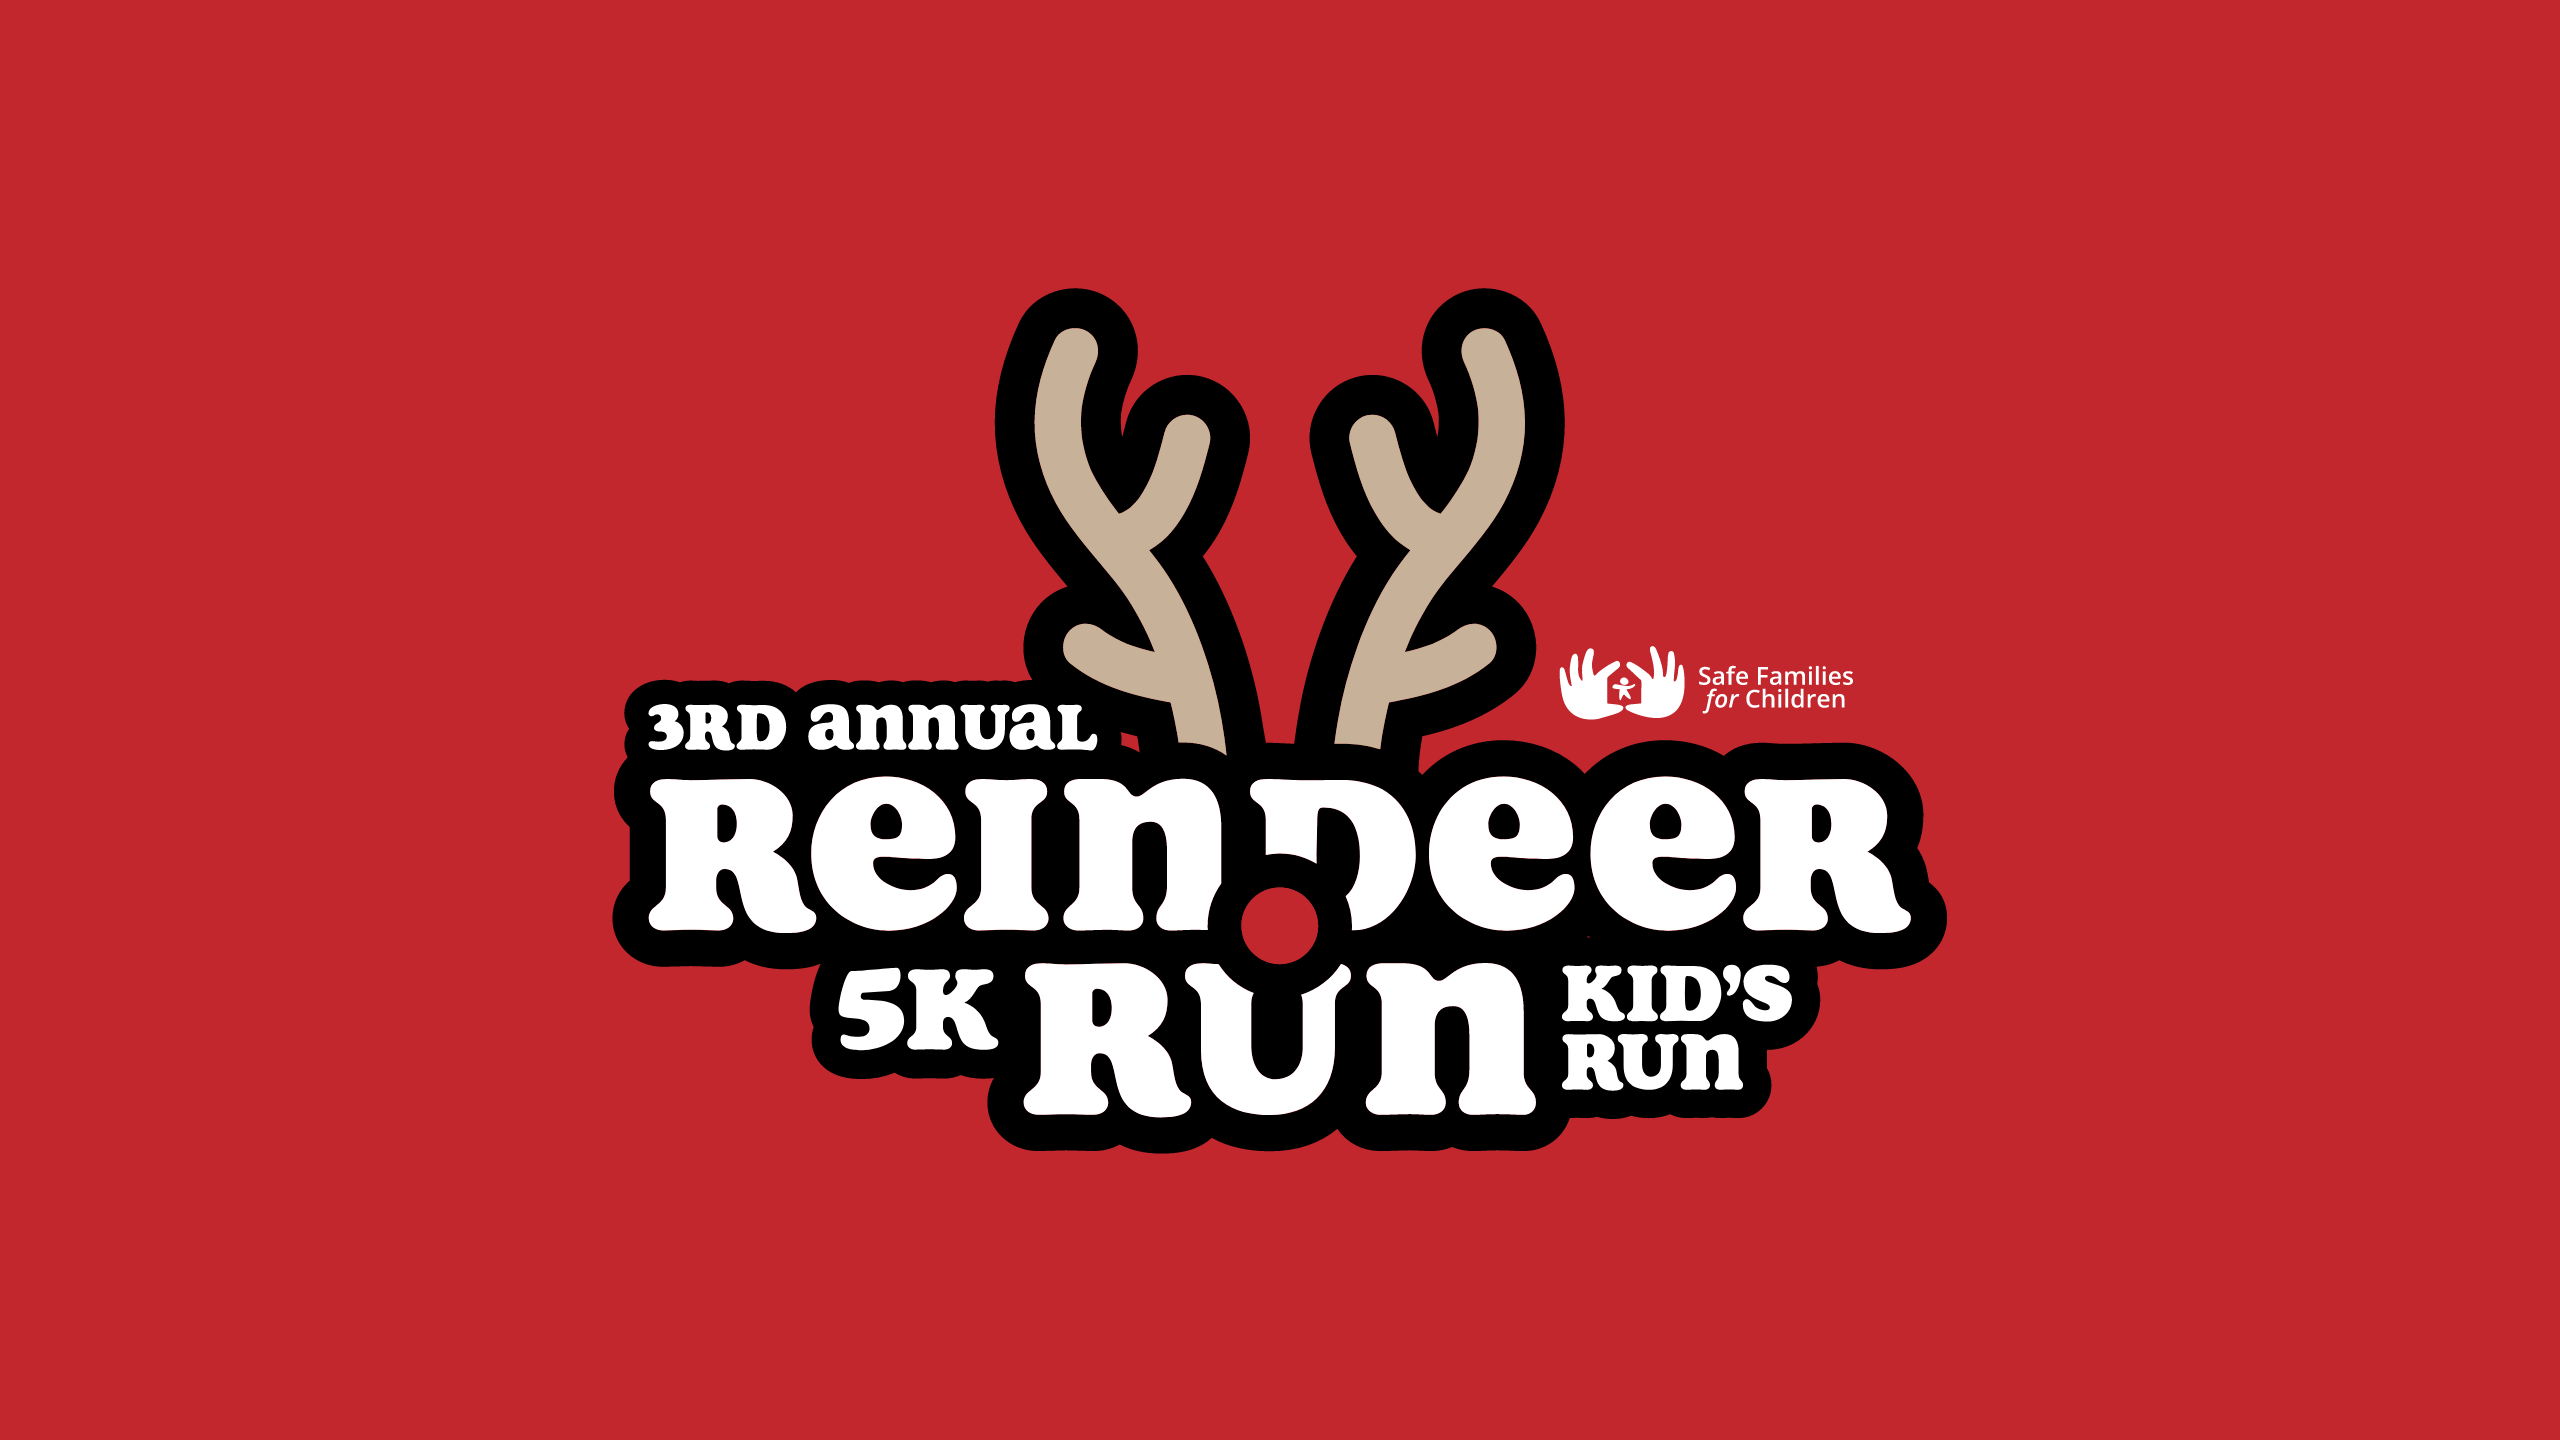 Safe Families Annual Reindeer Run